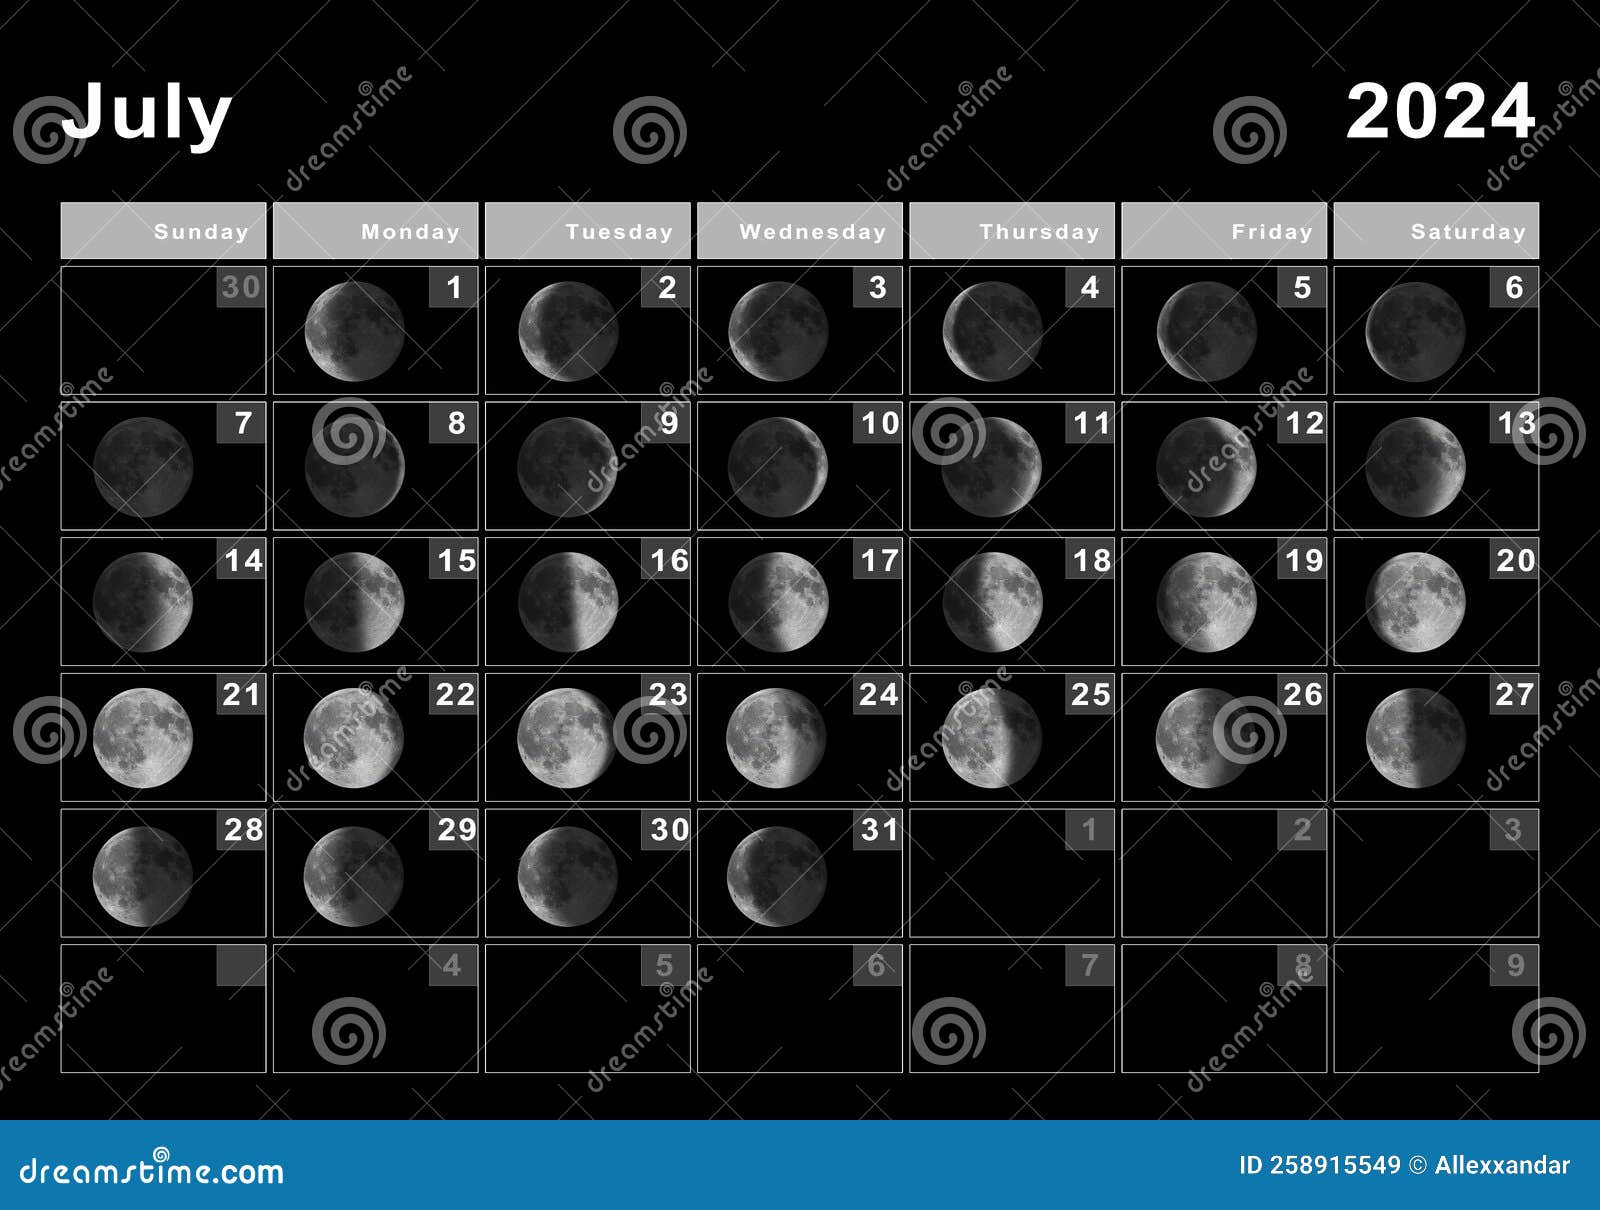 July 2024 Lunar Calendar, Moon Cycles Stock Illustration regarding July Moon Calendar 2024